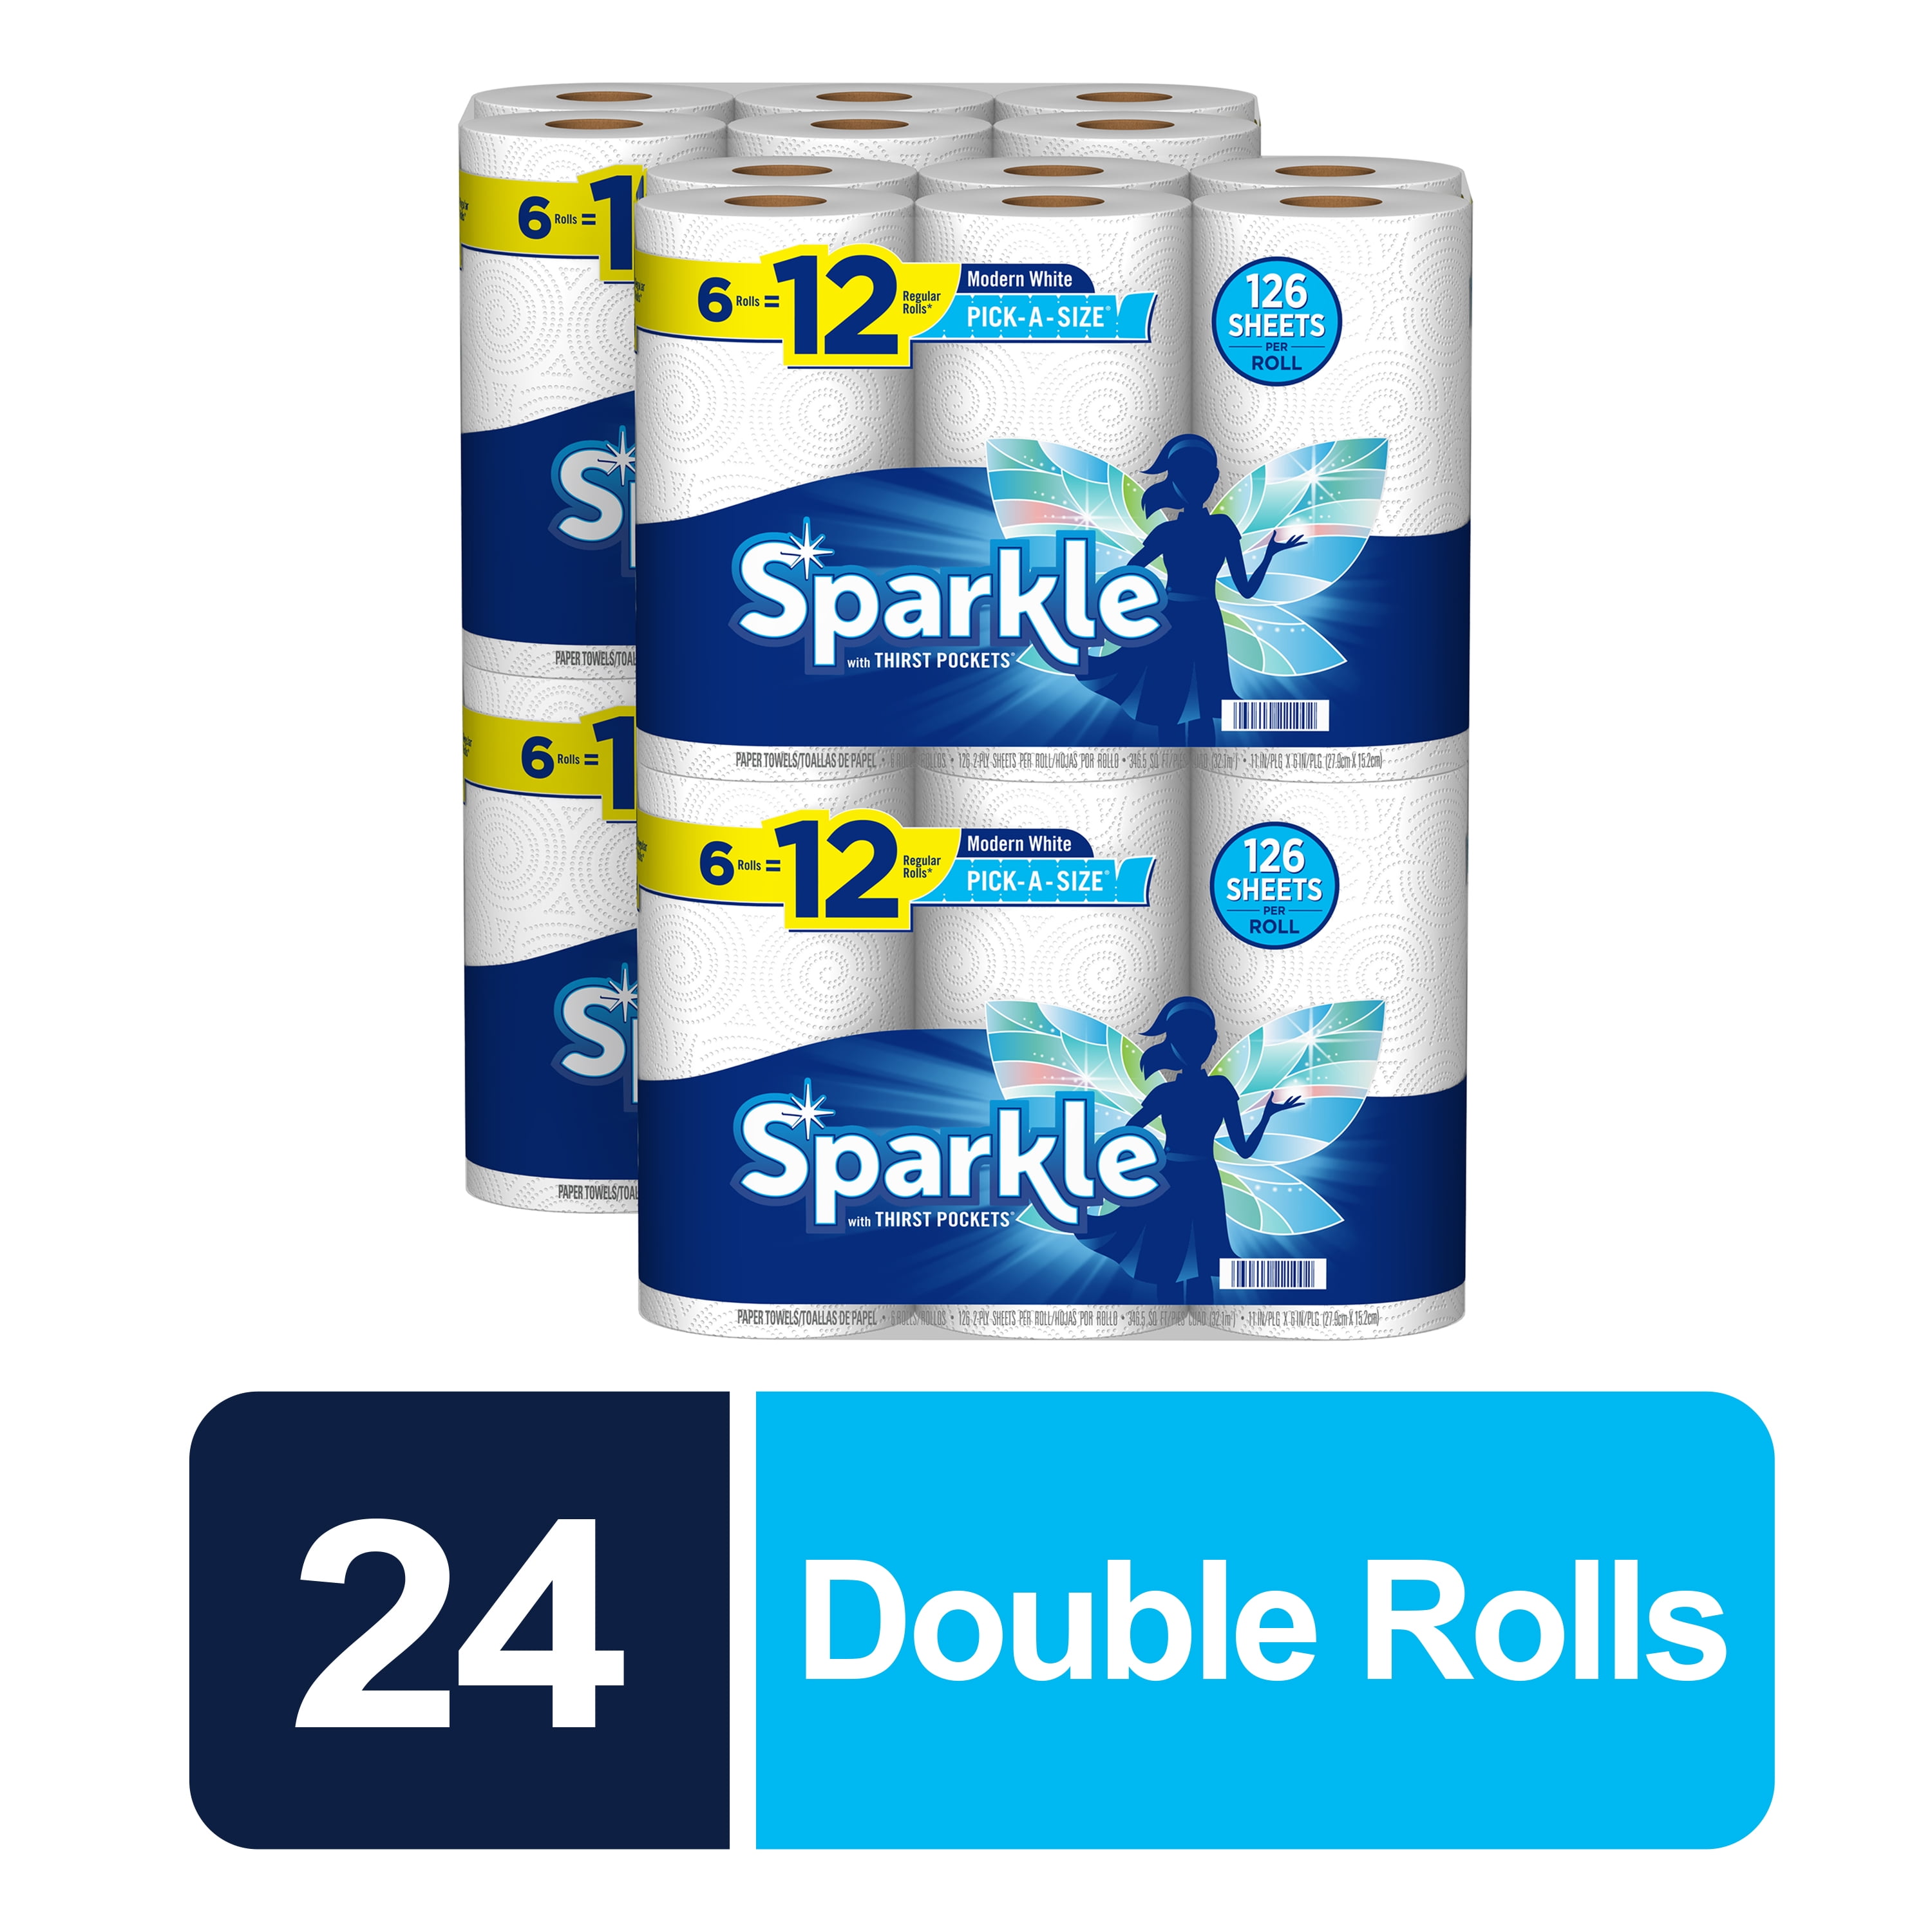 Details about   Sparkle Paper Towels = 20 Regular Rolls 10 Double Rolls Pick-A-Size 